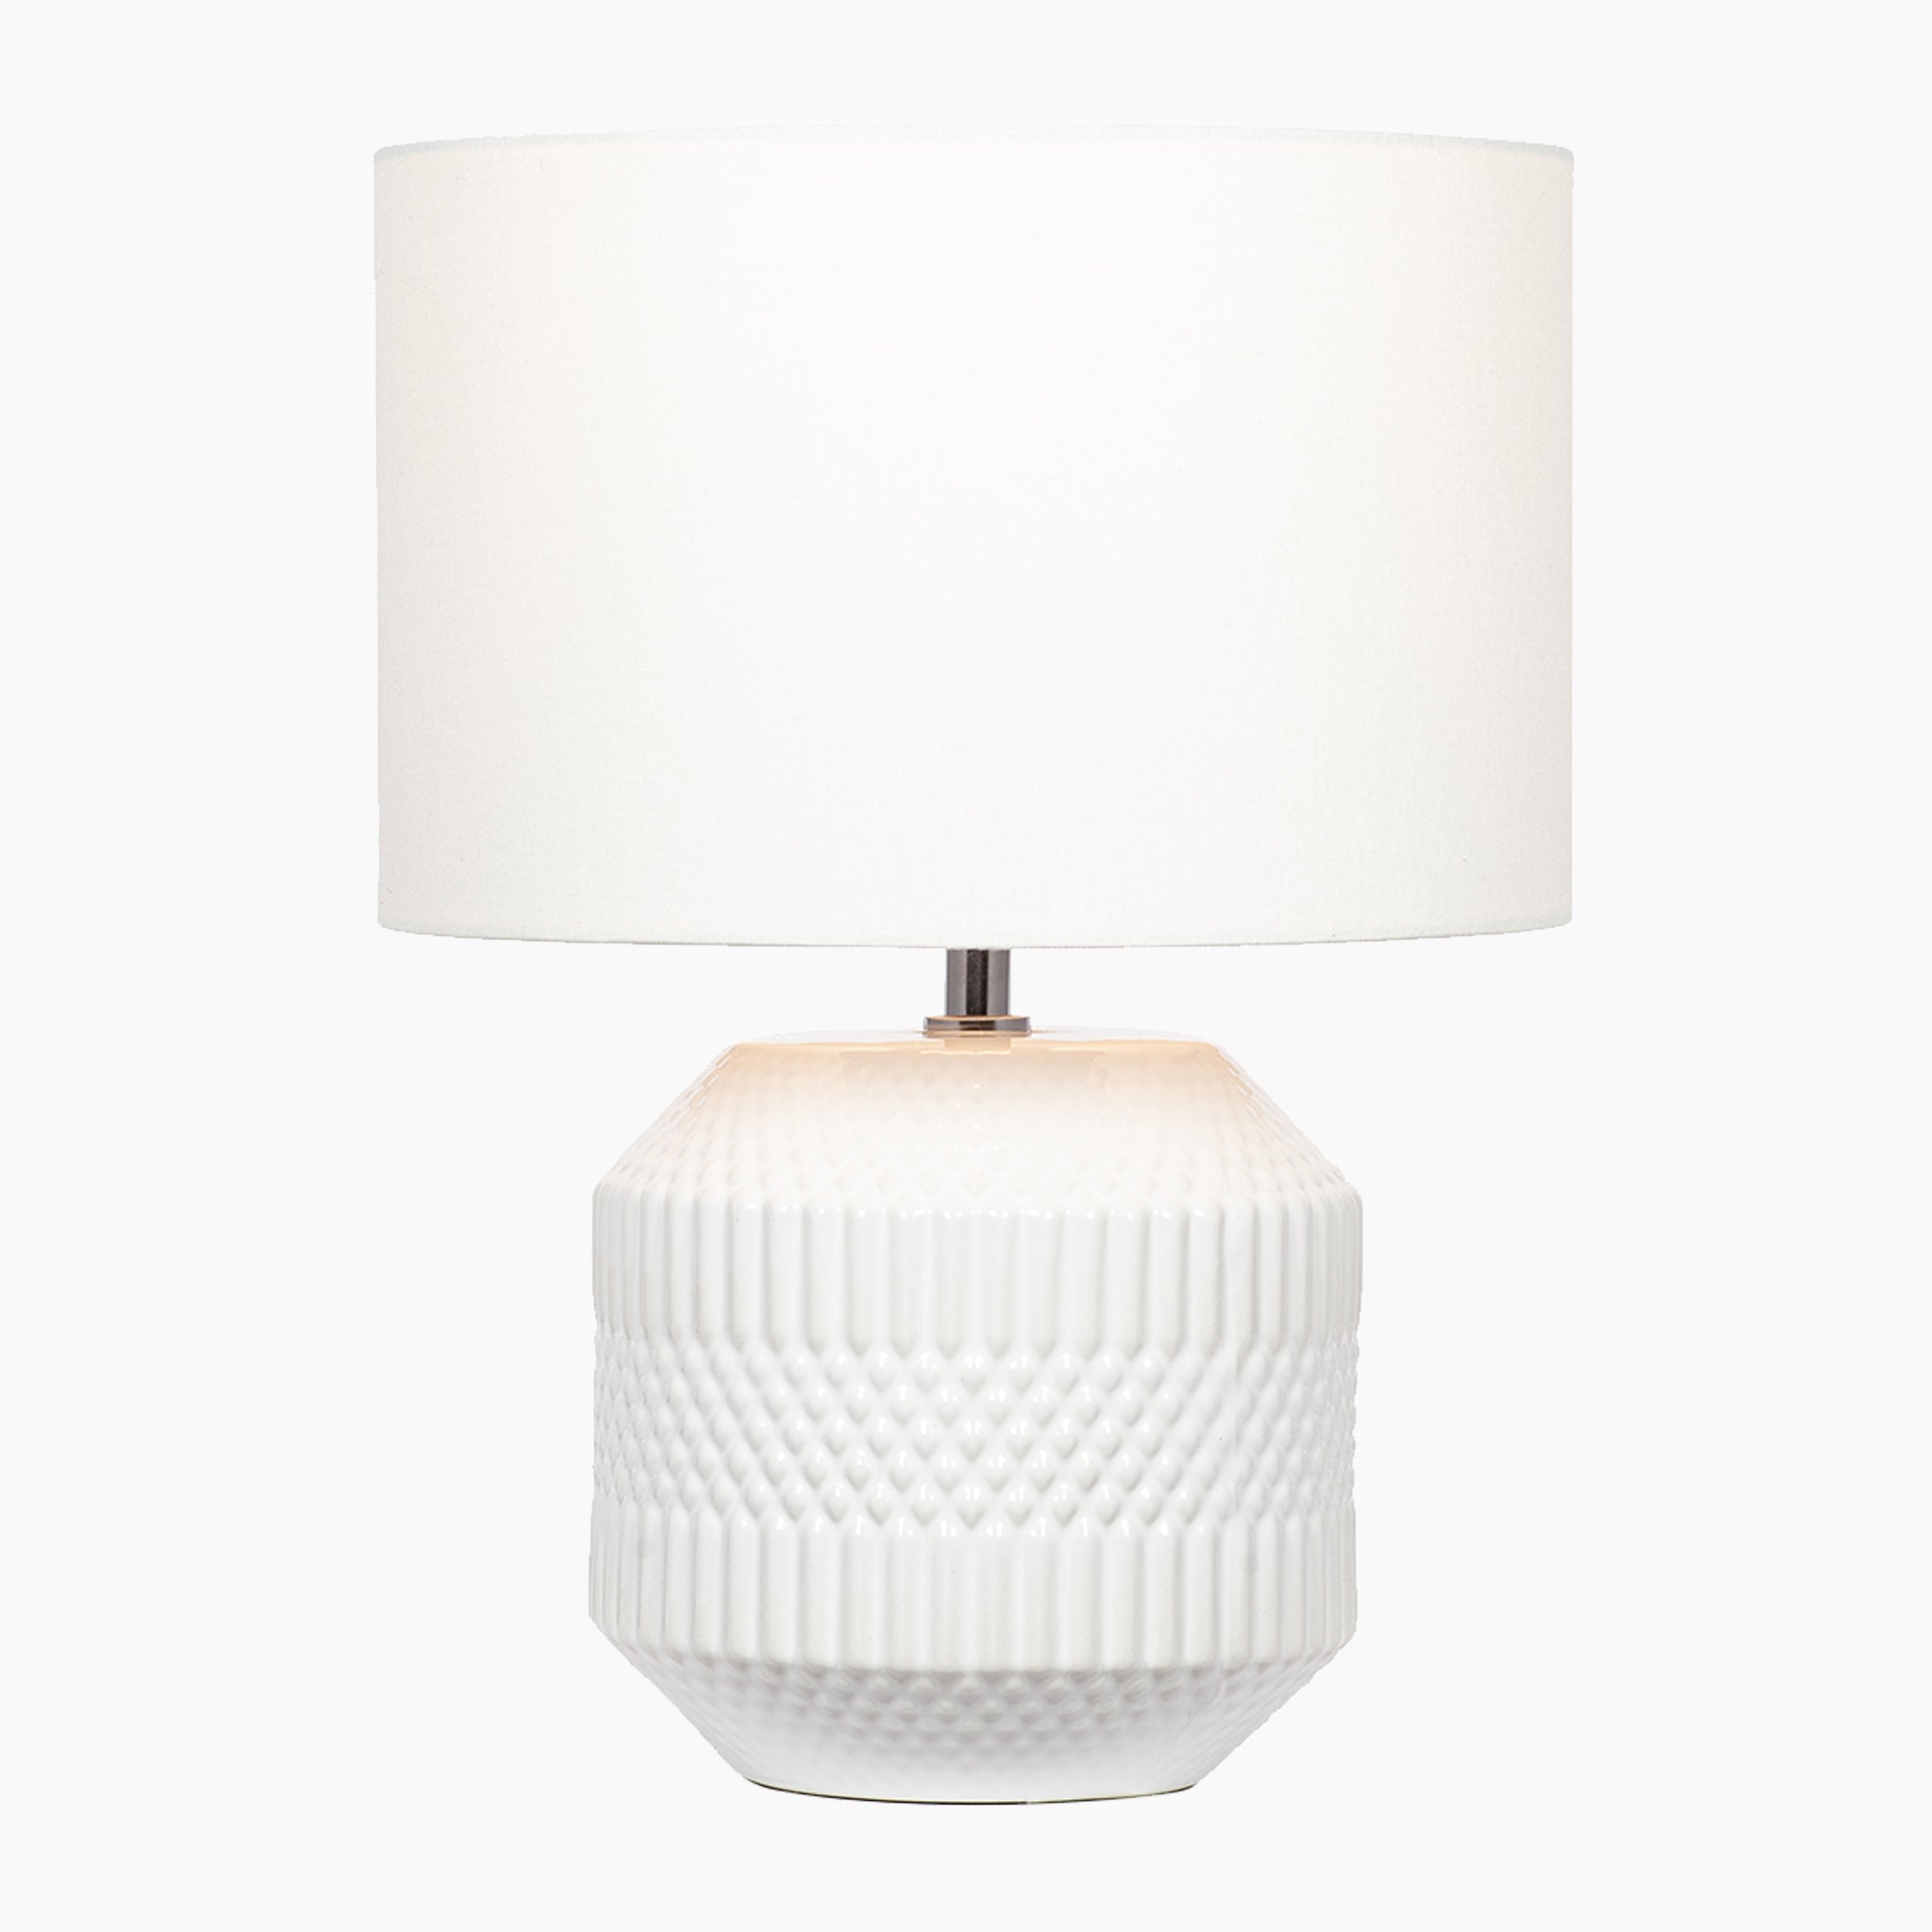 Meribel Geo Textured Ceramic Table Lamp in White